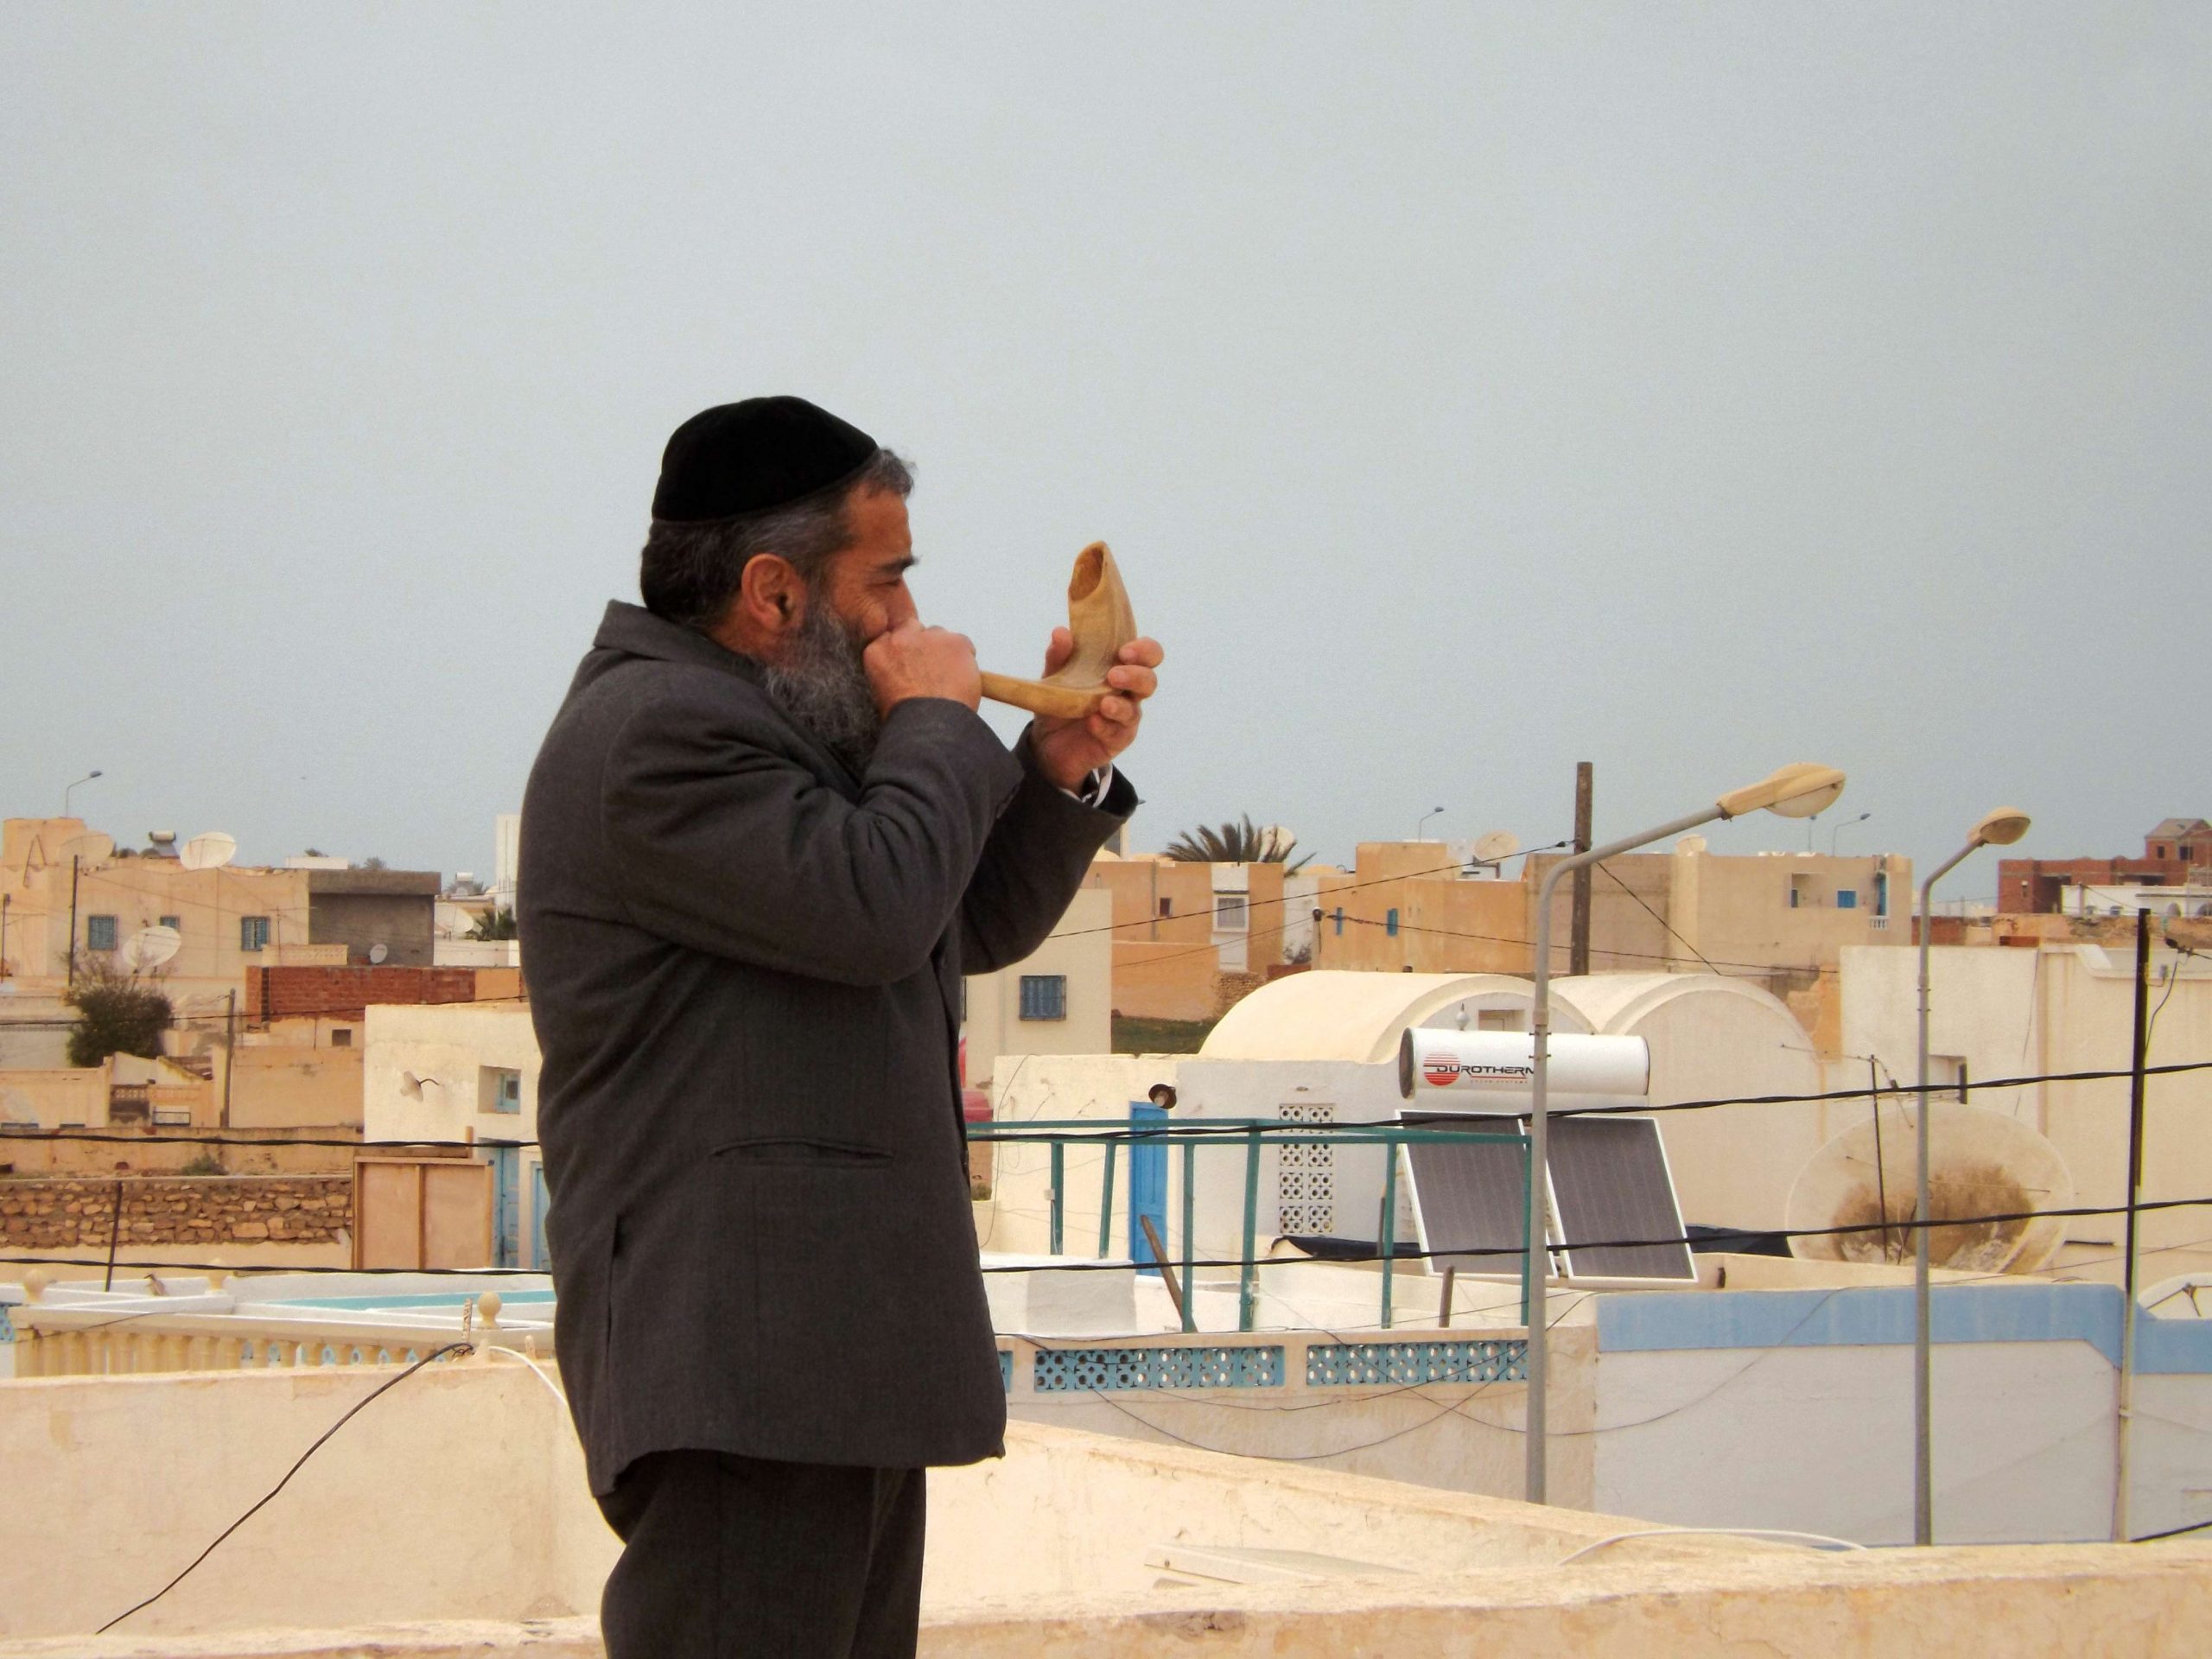 An ancient custom continues on the rooftops of Djerba. Rabbi Chaim Biton with his shofar